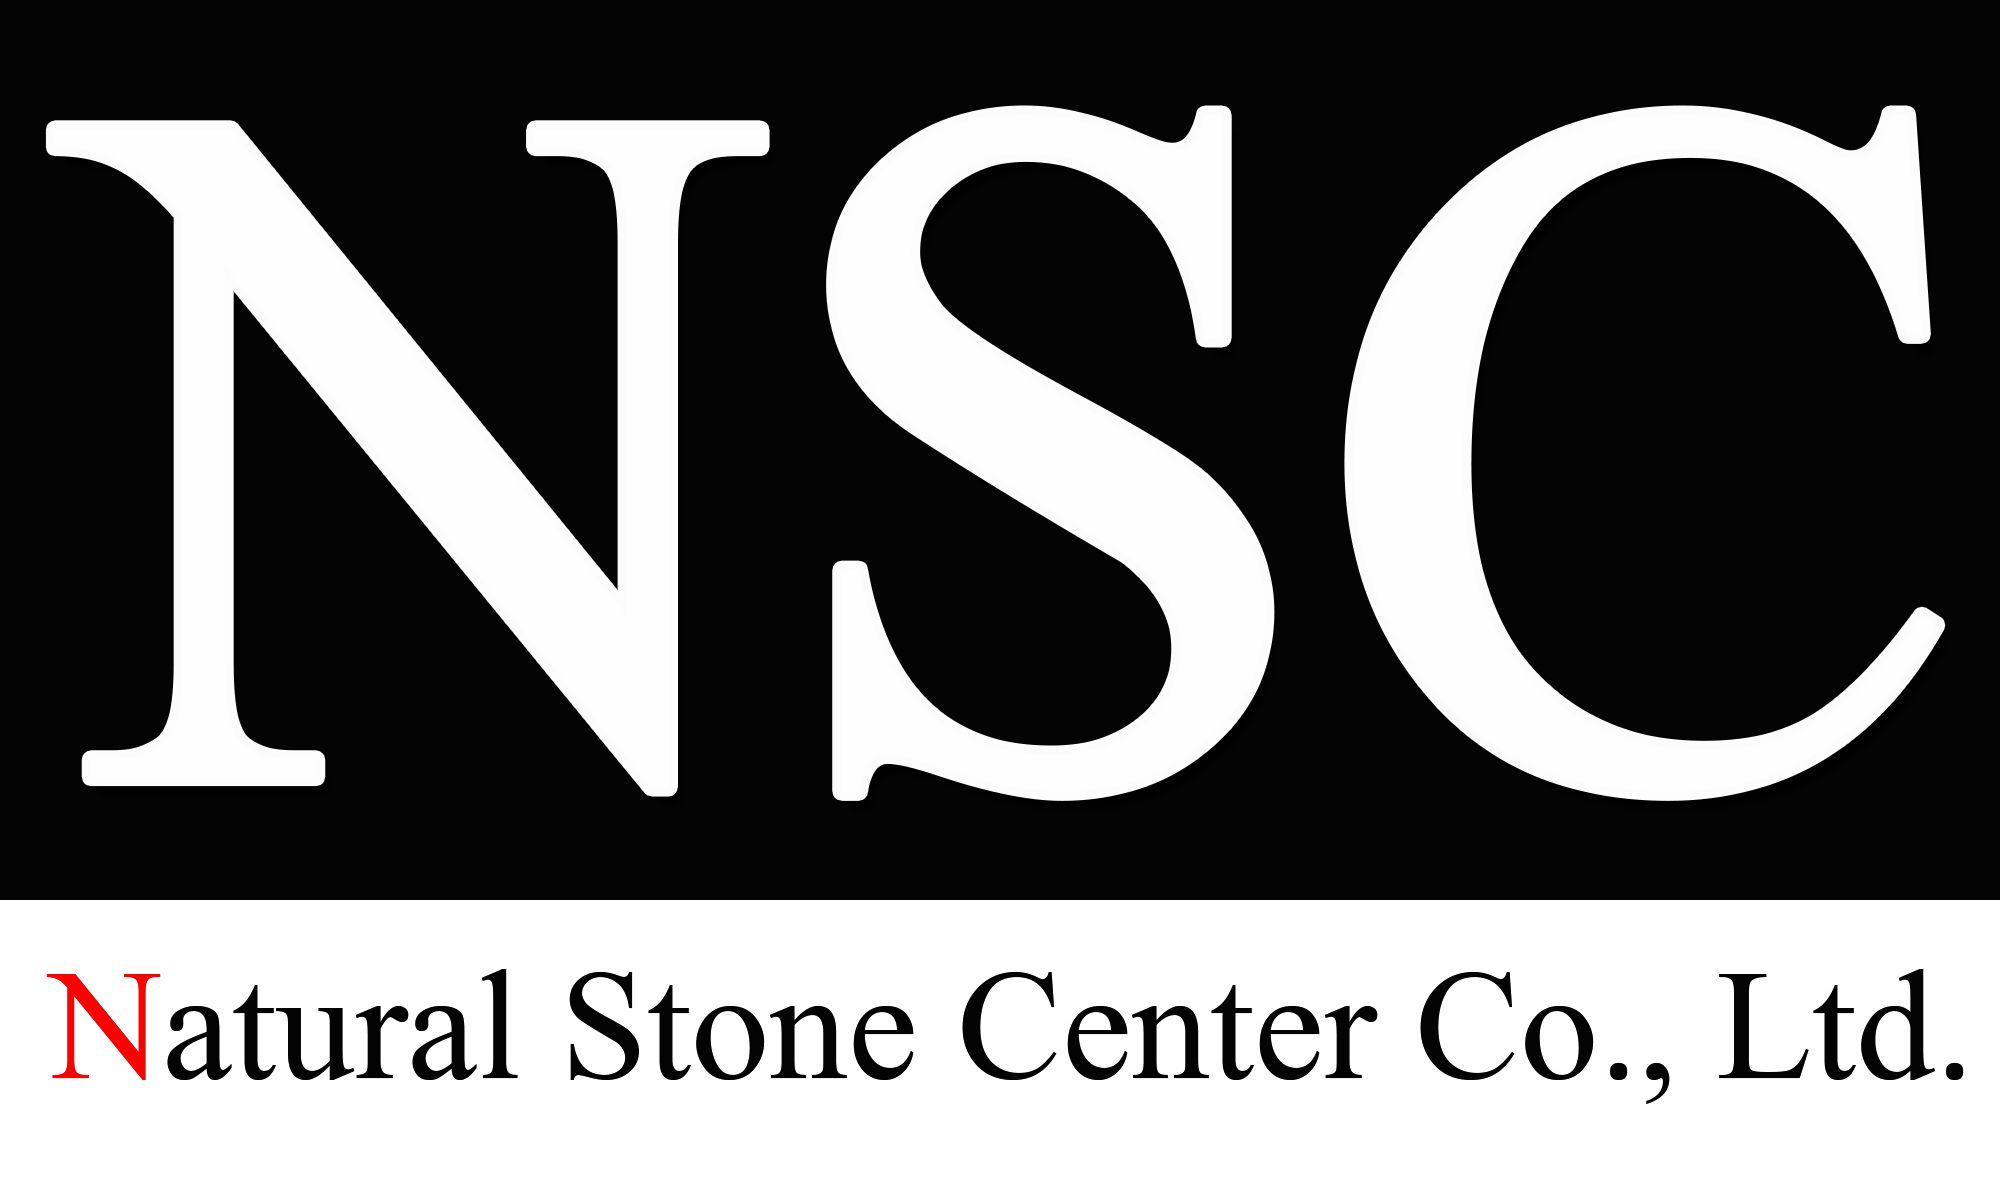 Natural Stone Center Co., Ltd.